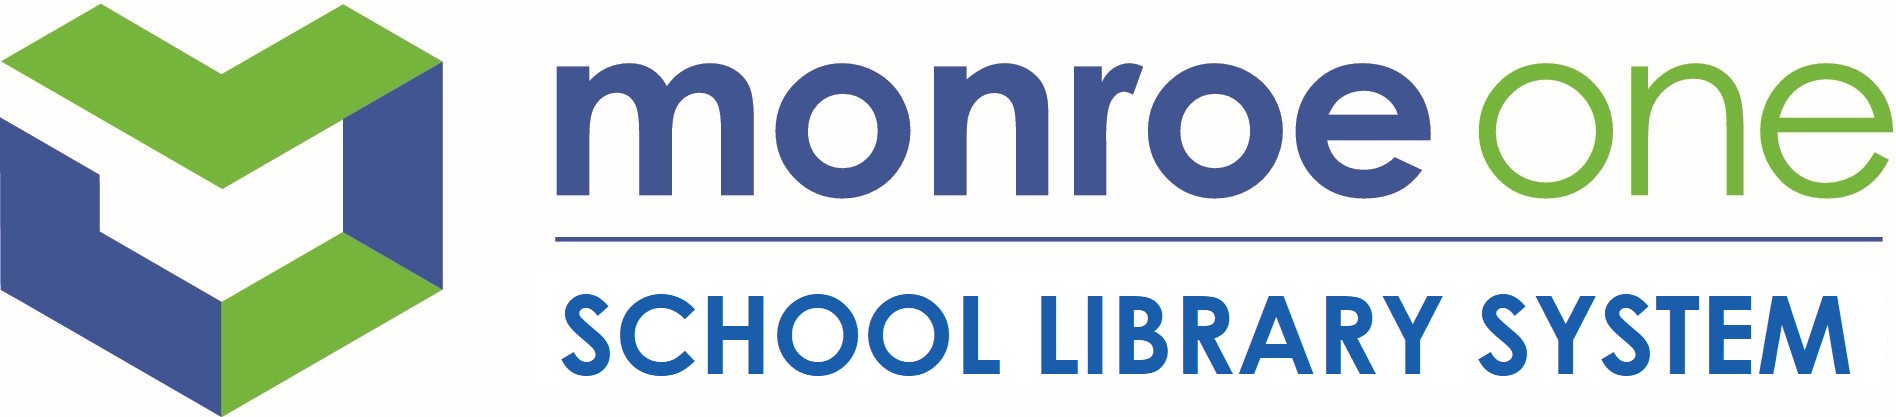 Monroe #1 BOCES School Library System